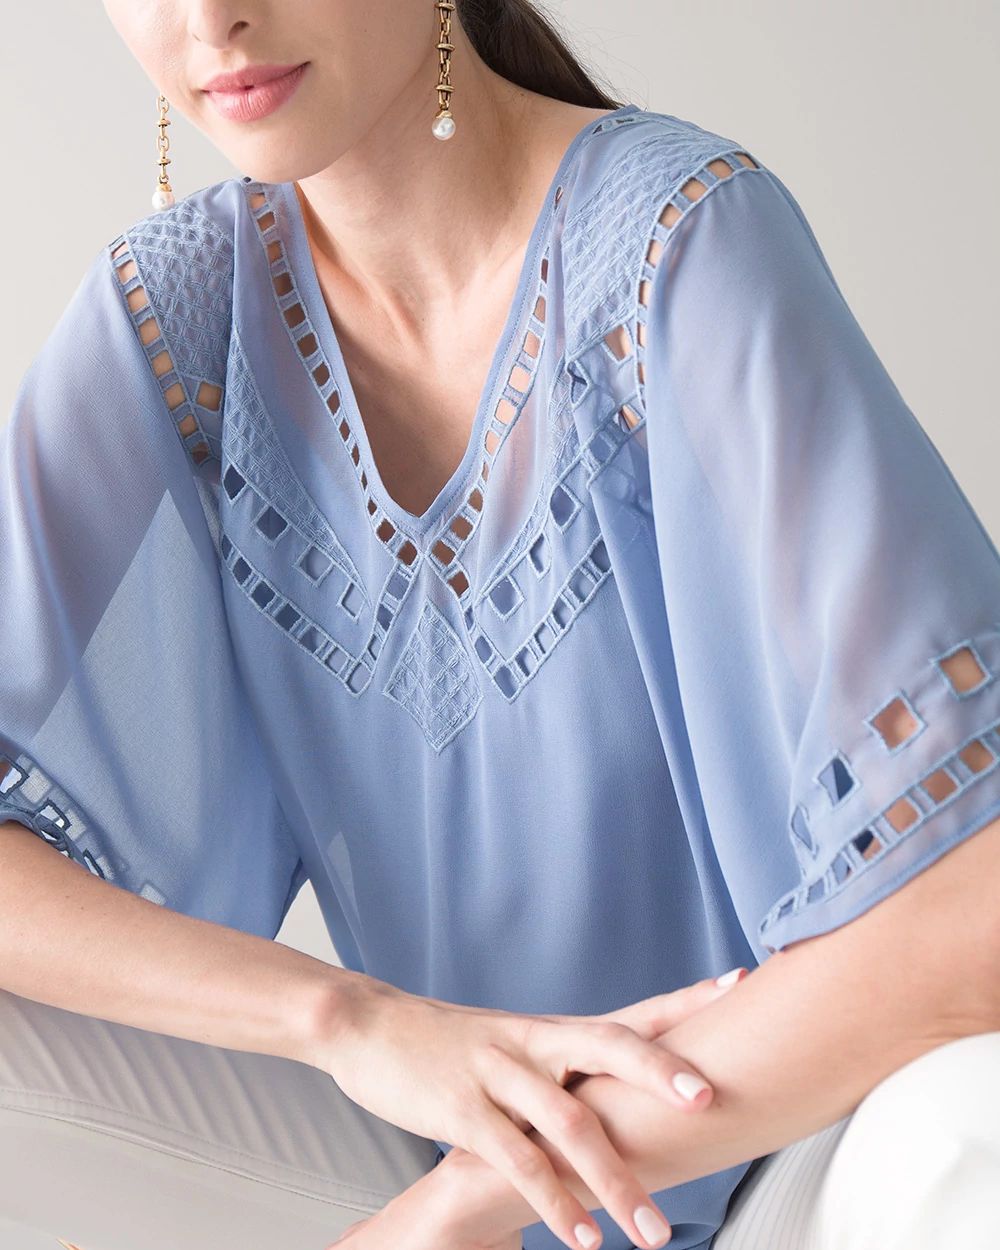 Elbow Sleeve Cutout Kimono Blouse click to view larger image.